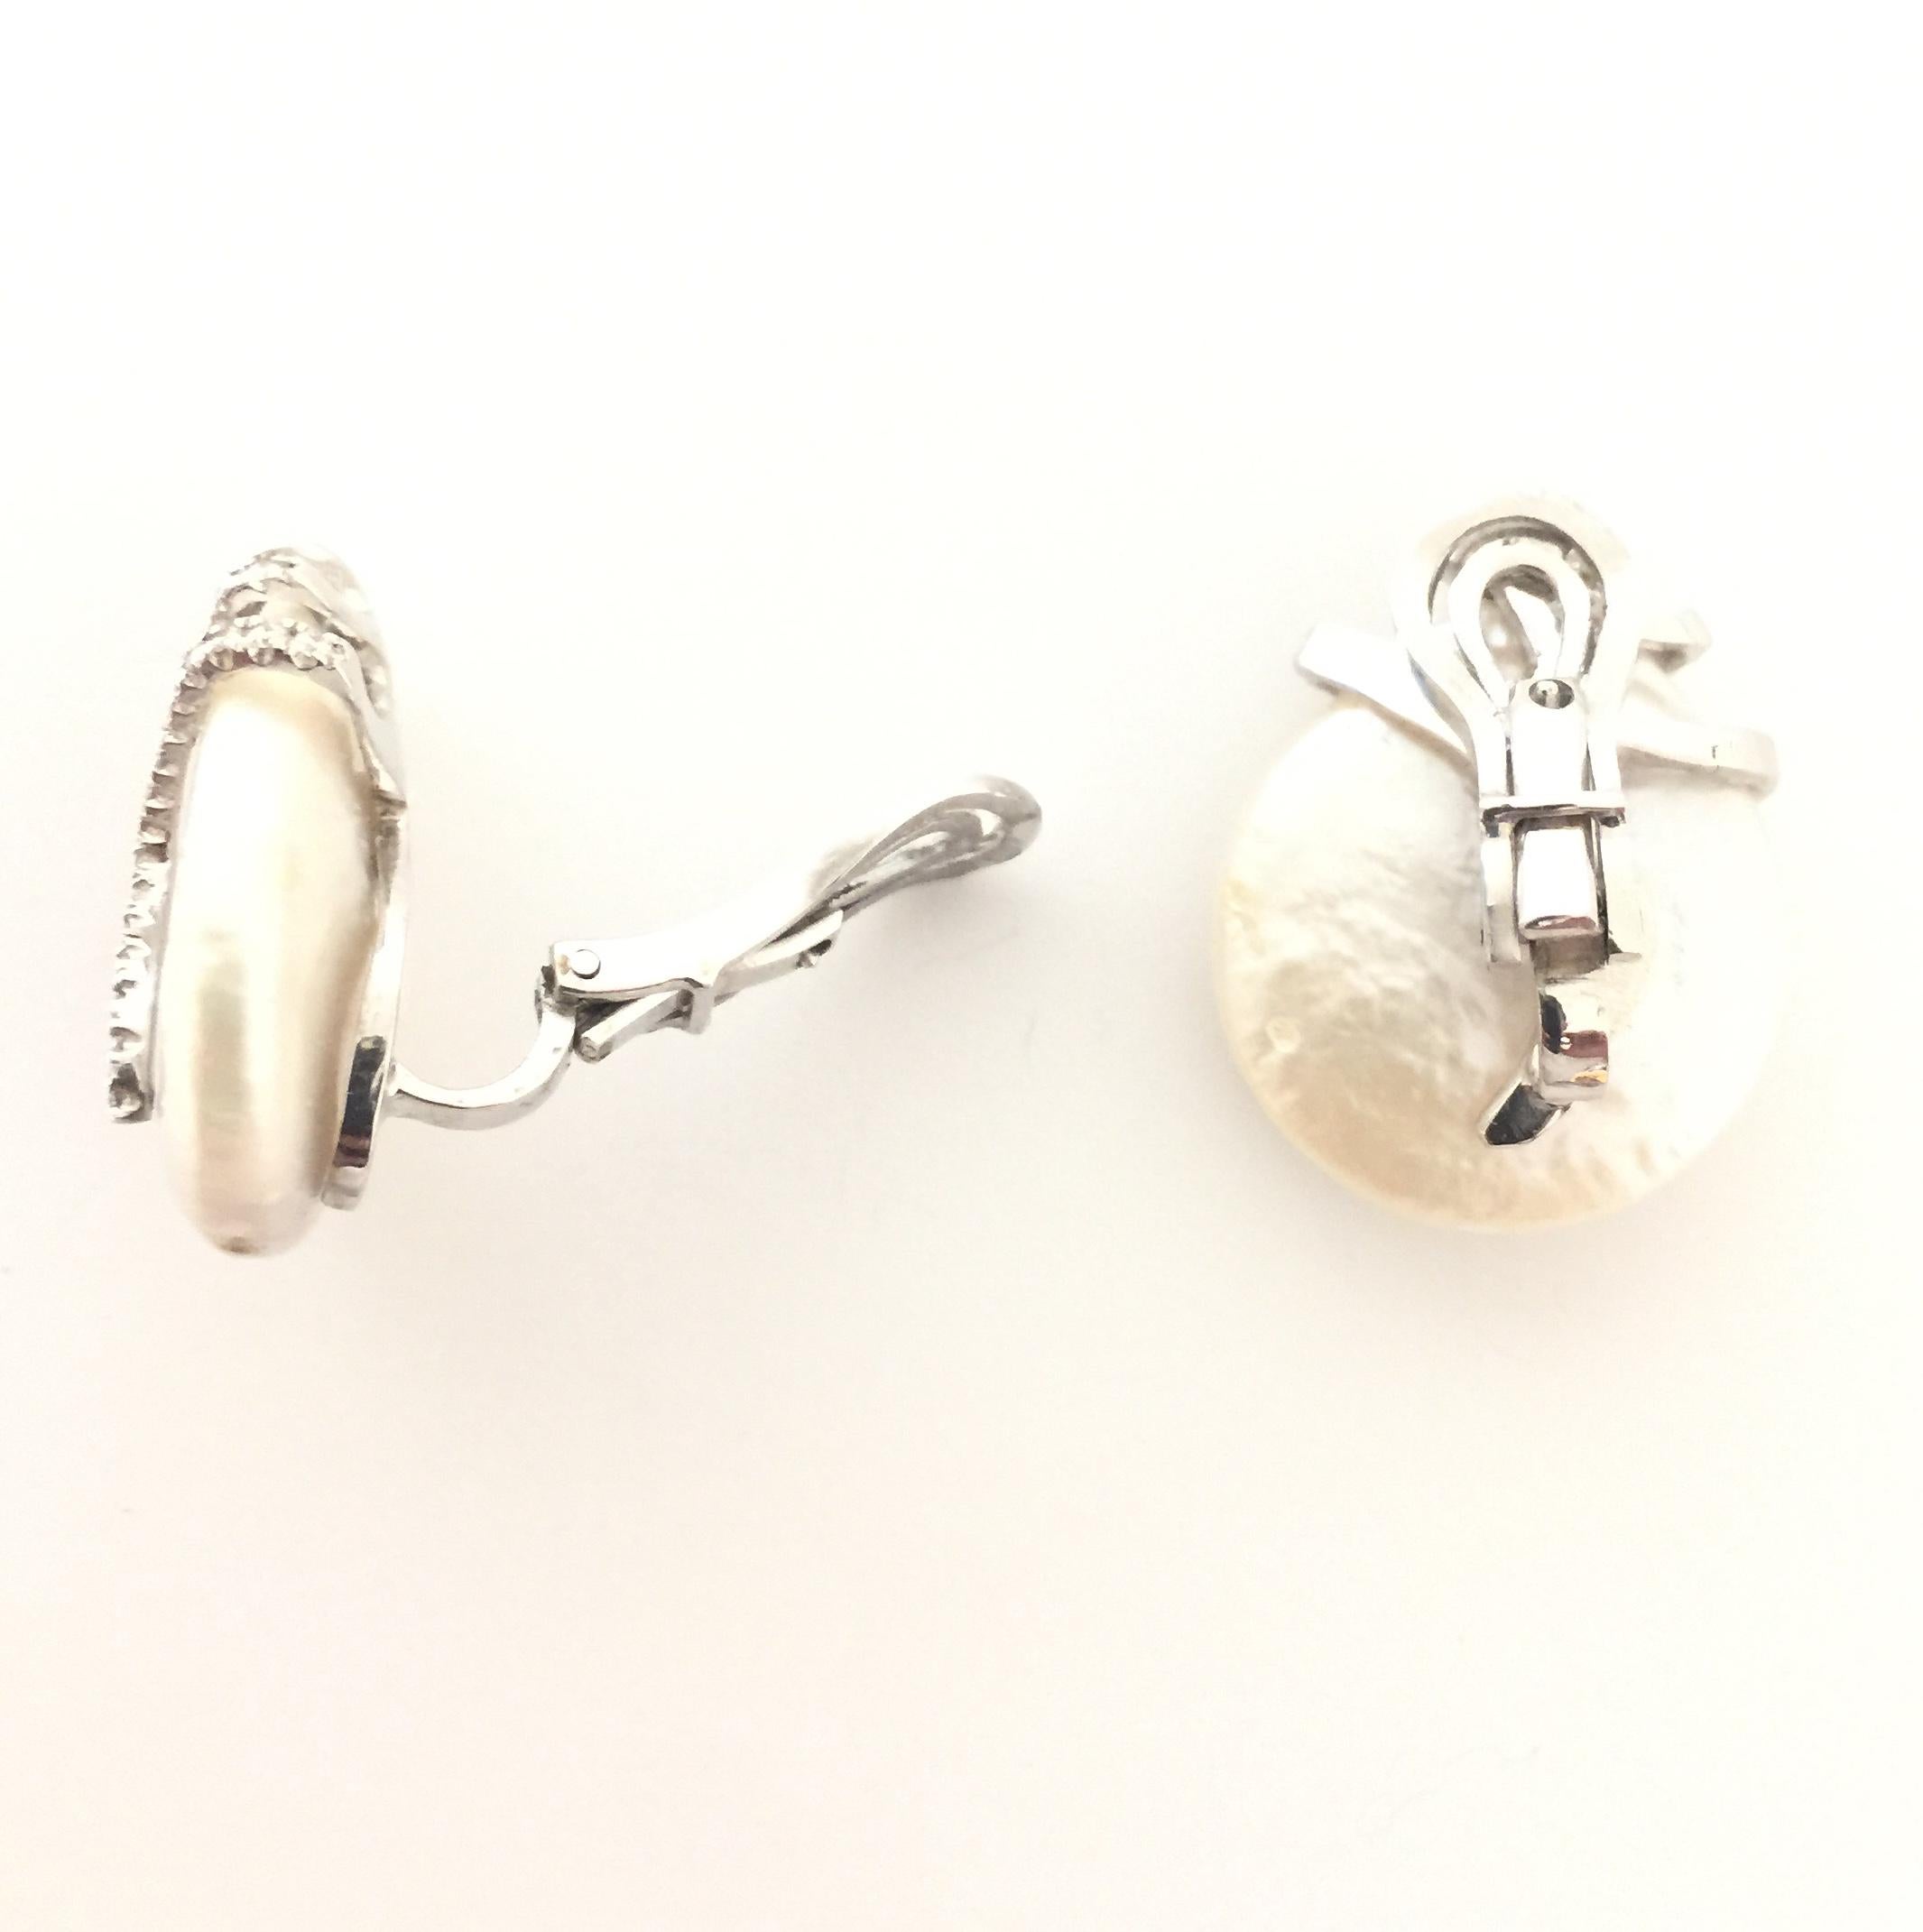 Yvel Pearls And Diamonds Earring.
18k White Gold 
Pearls 
Diamonds 0..60ctw
Clip on Earring
E295FLLW